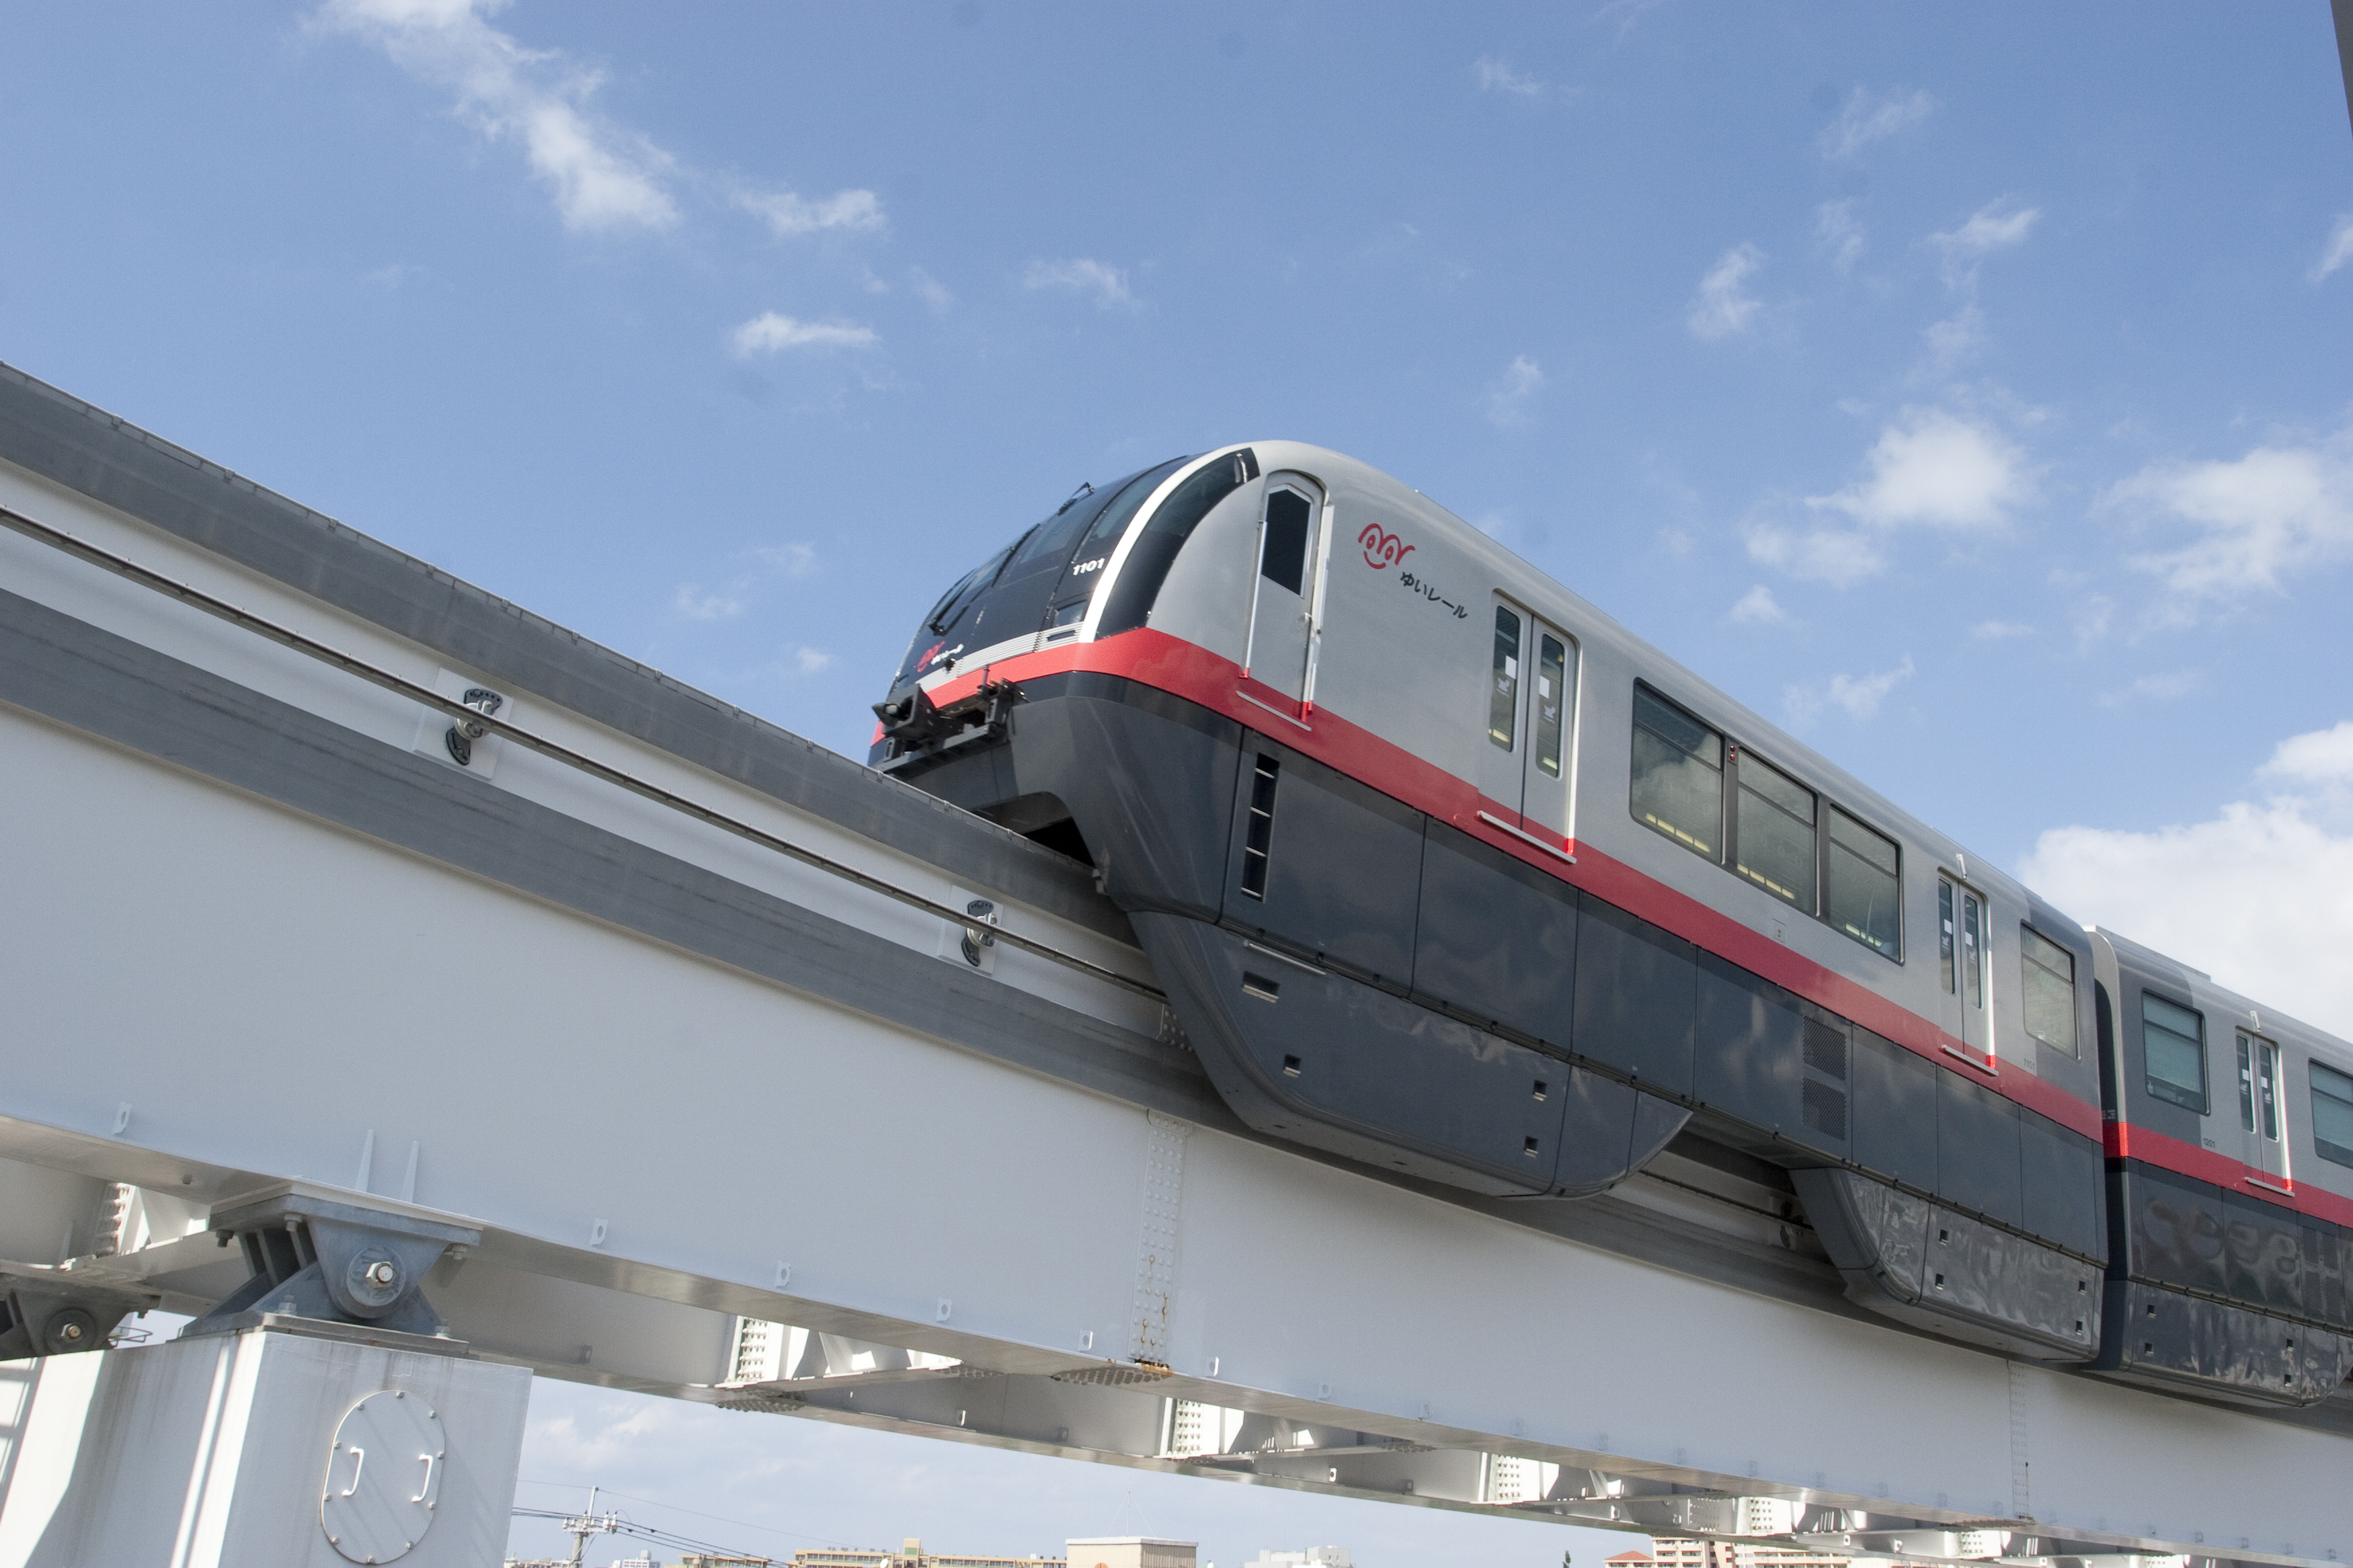 Okinawa Urban Monorail